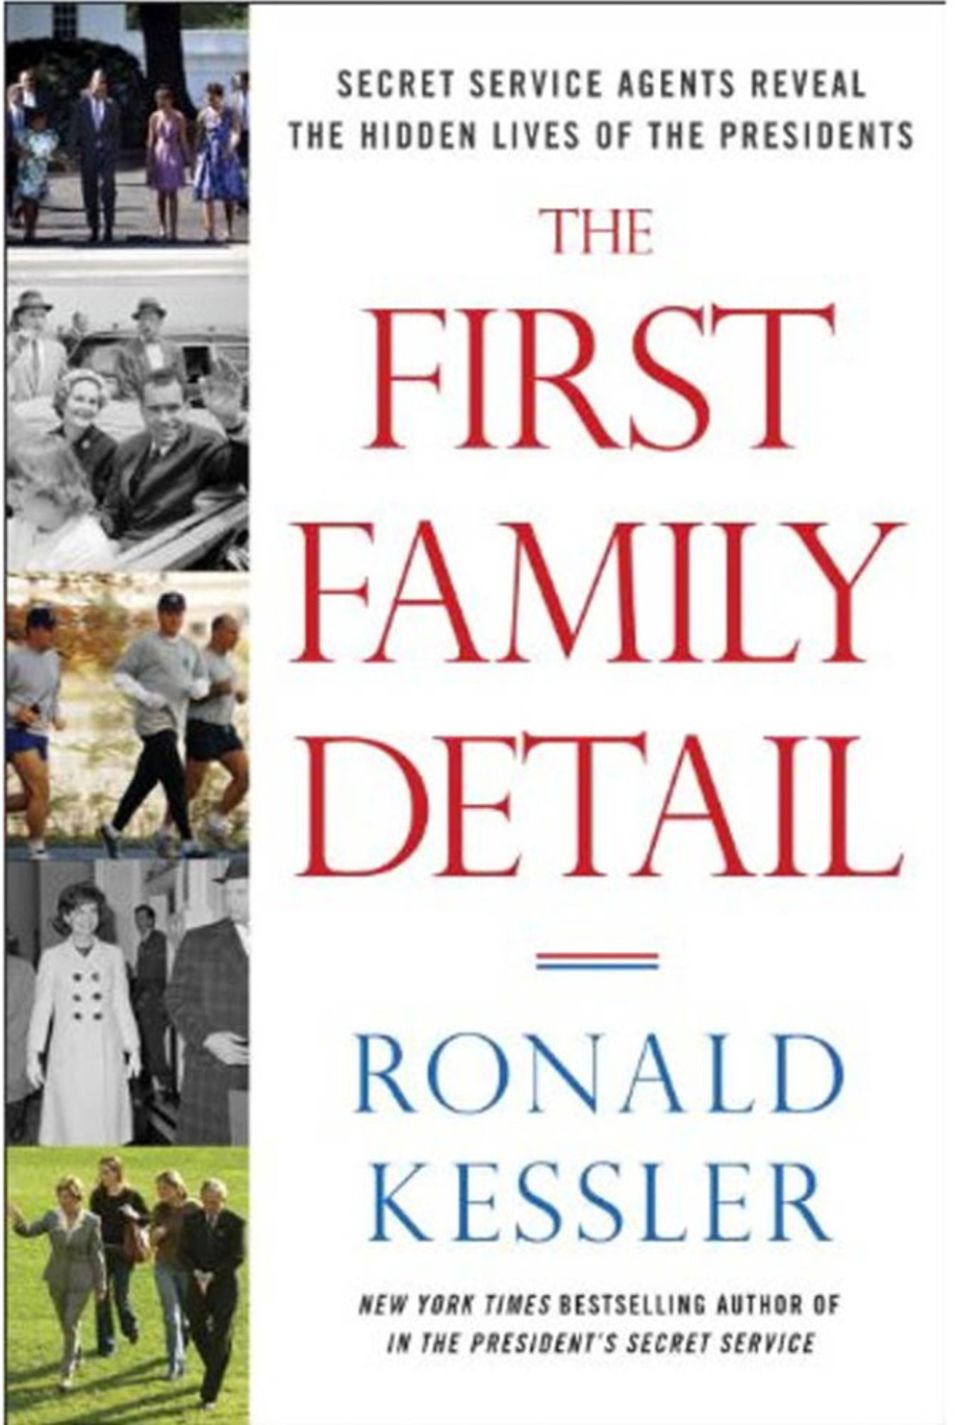 "The First Family Detail" gibt pikante Details über Bill Clintons Liebesleben preis (Crown Forum Verlag, 272 S., 18,90 Euro).